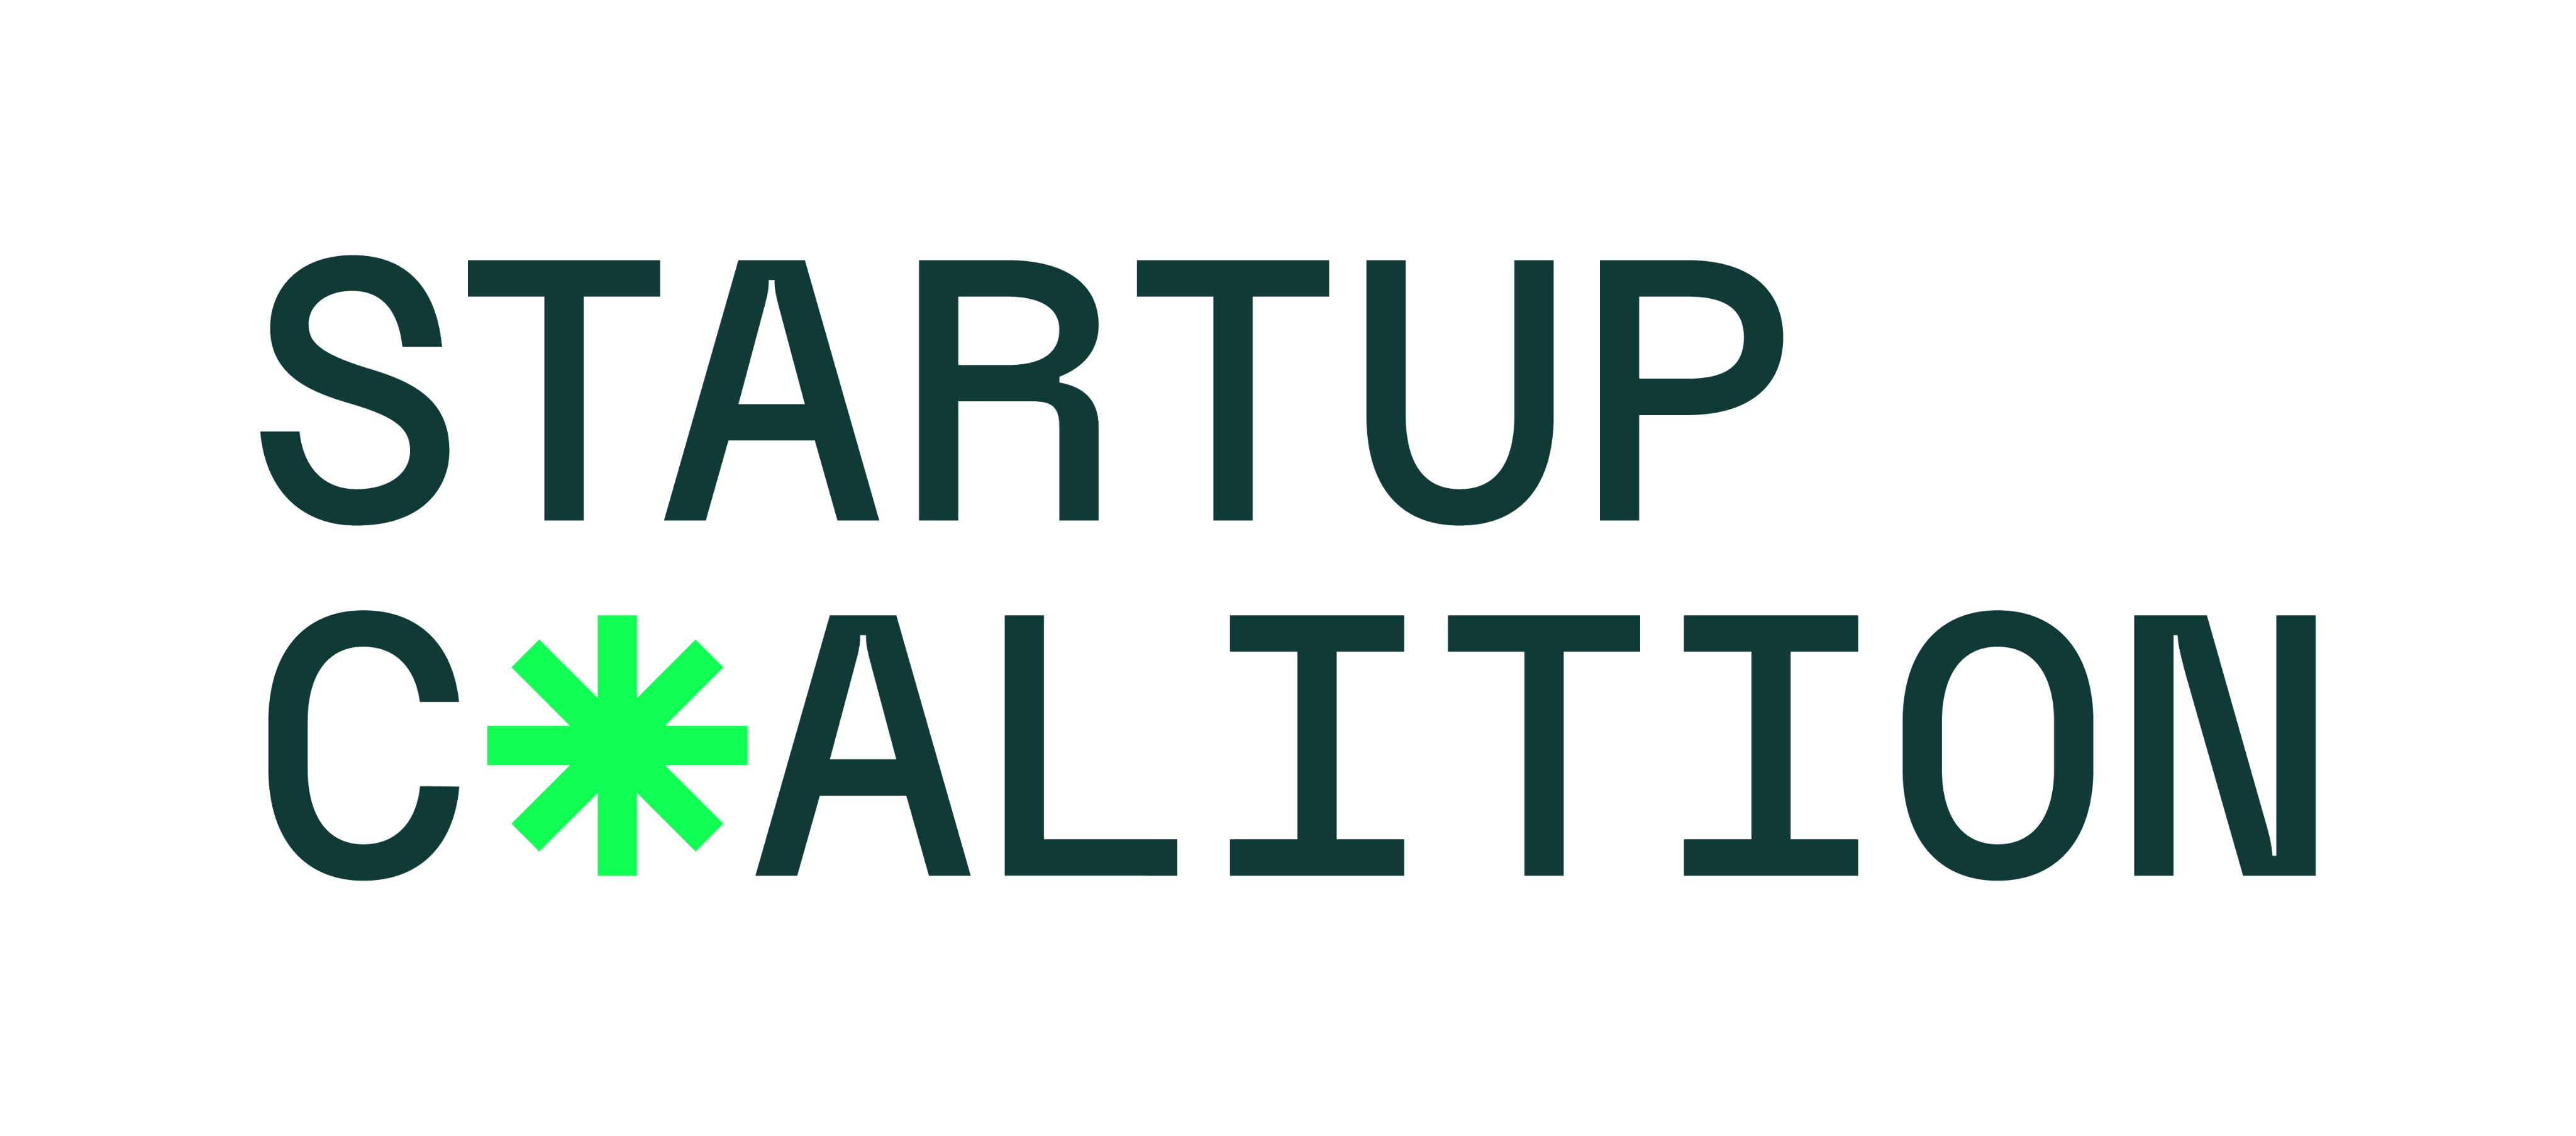 Startup Coalition logo